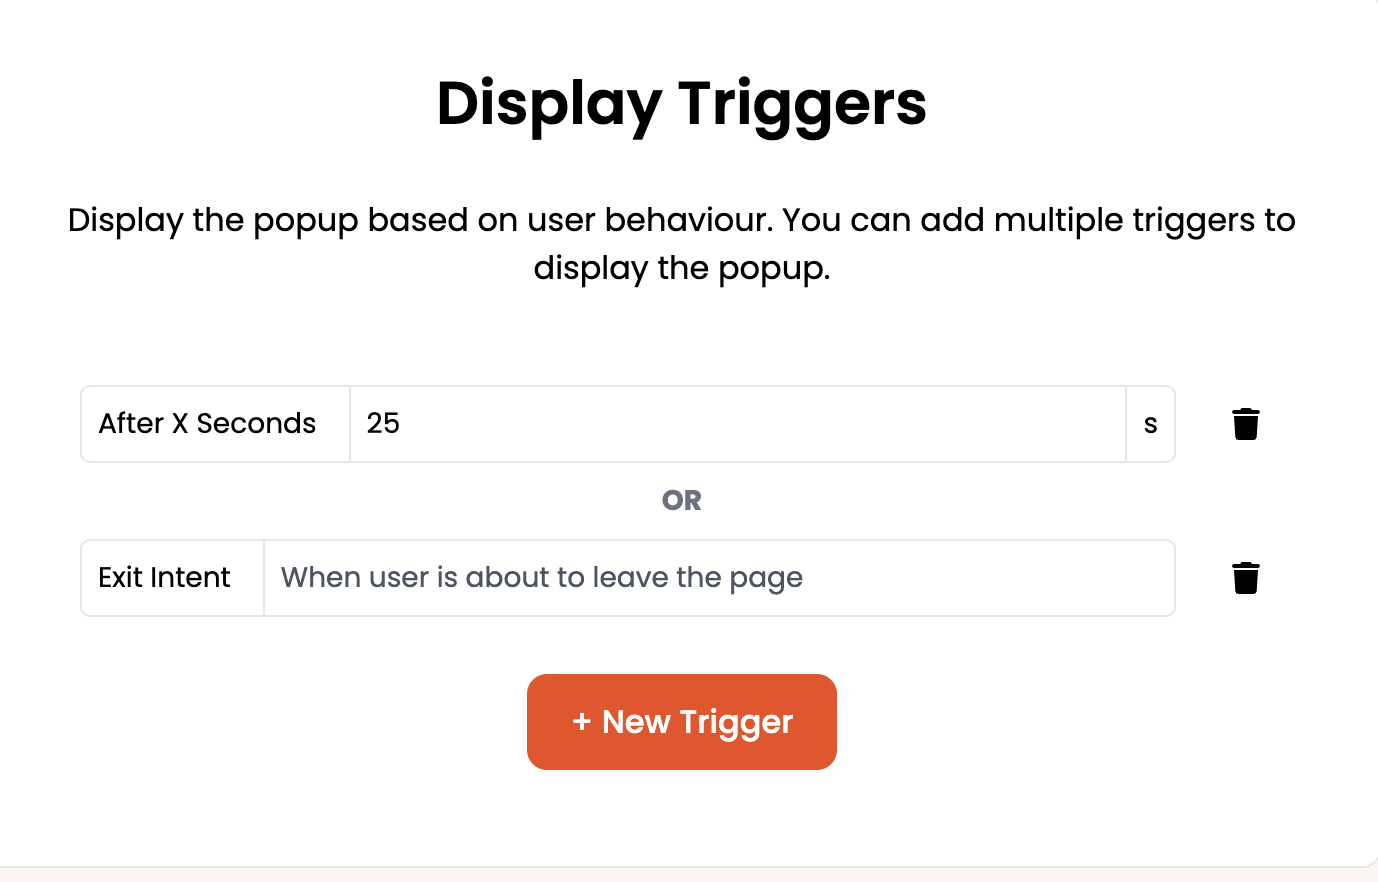 Define Display Triggers